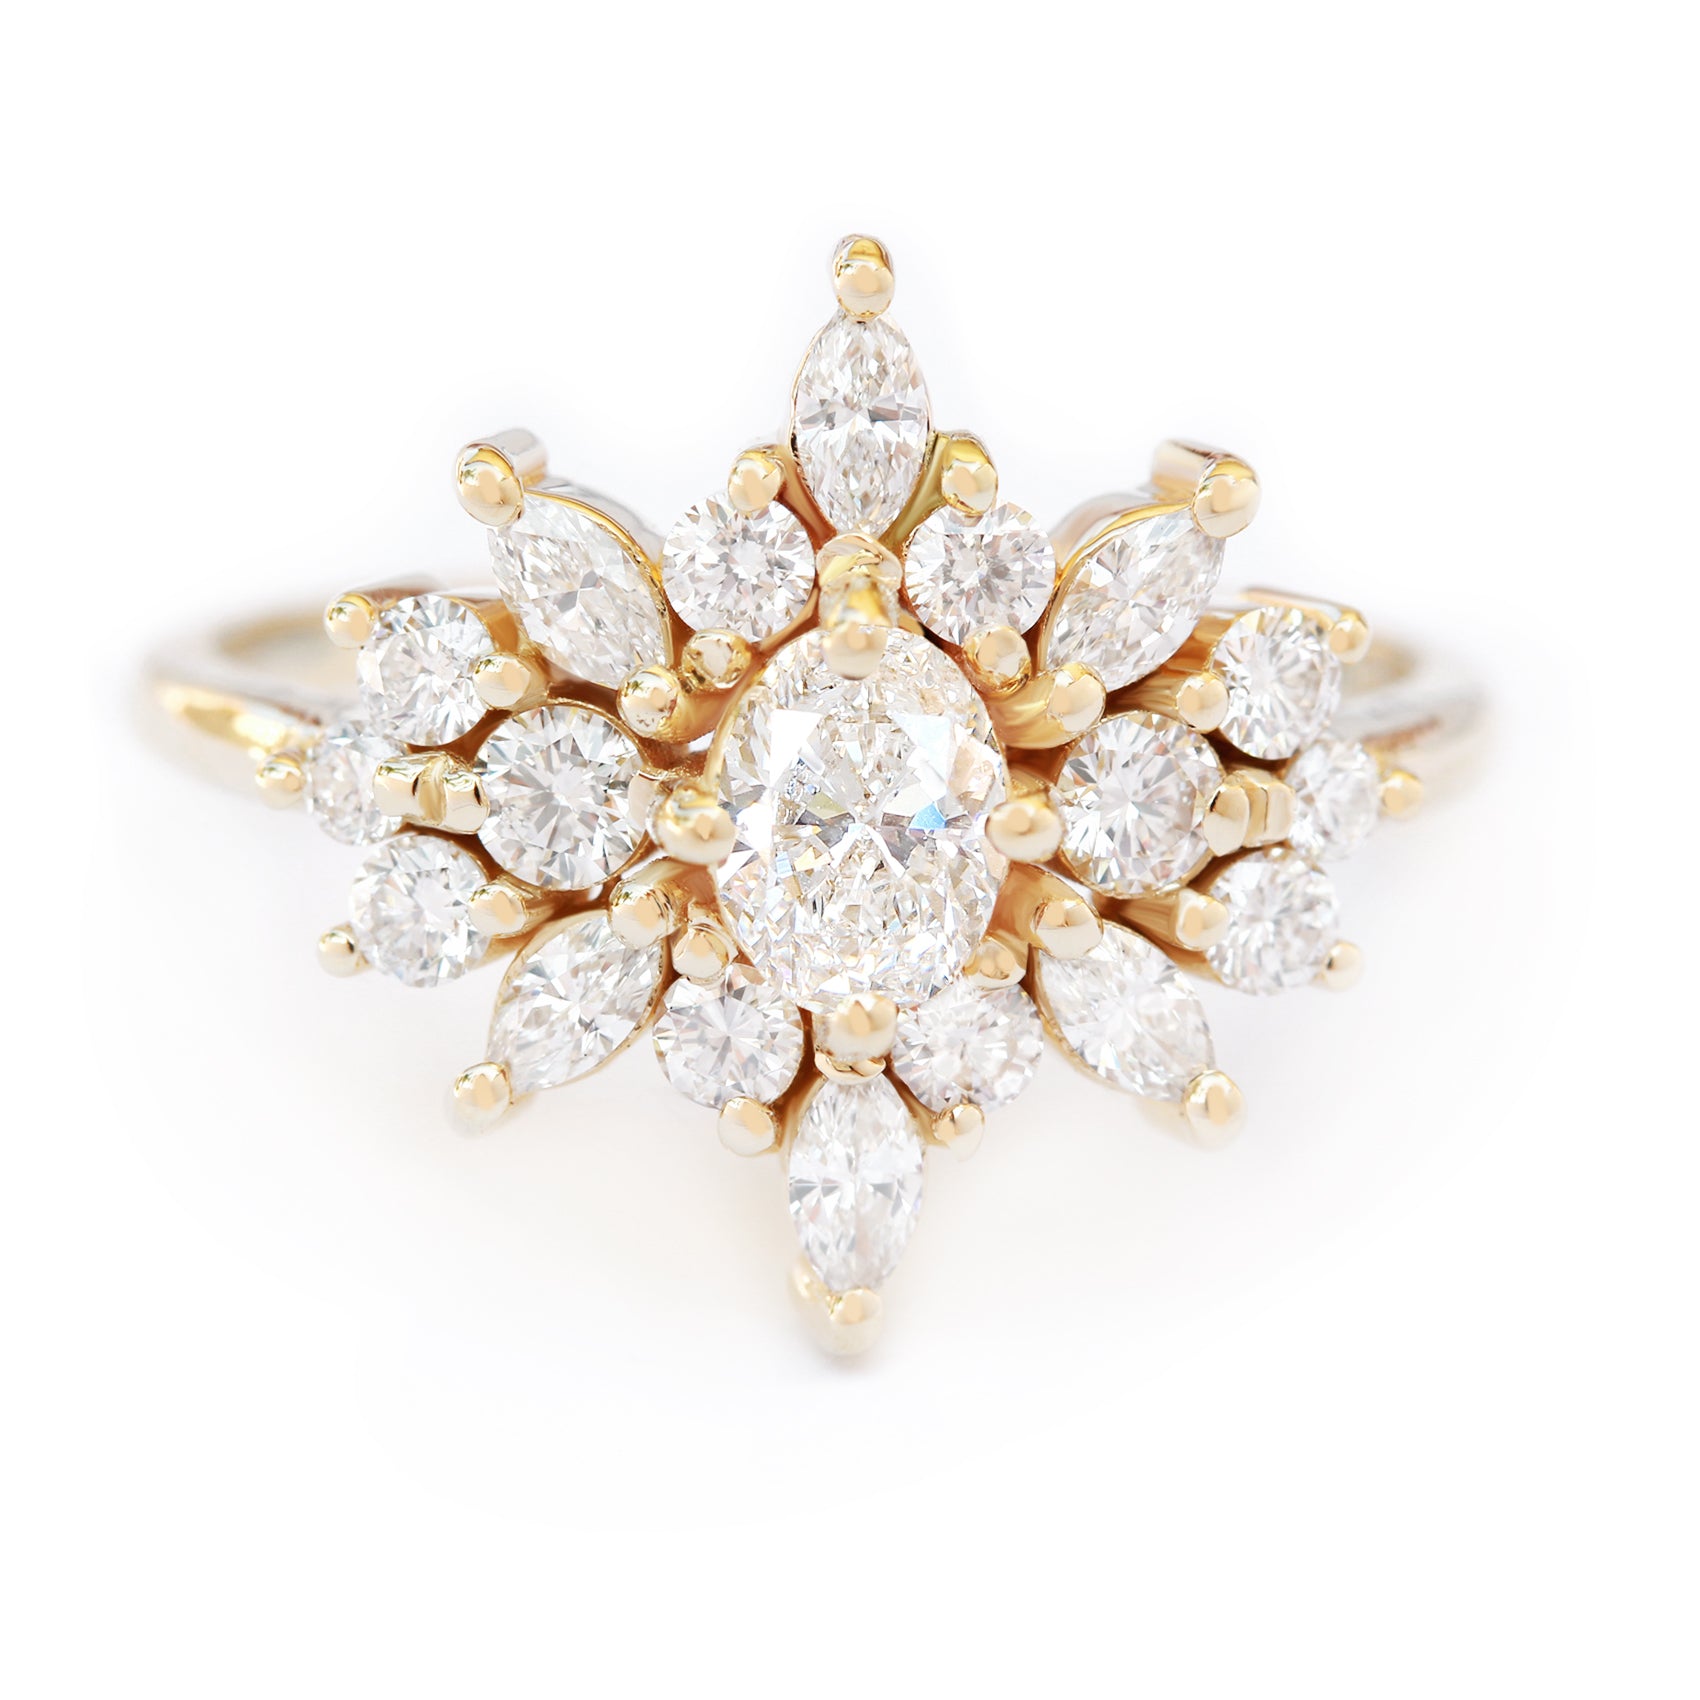 1ct diamond art deco engagement ring, Phoenix ♥